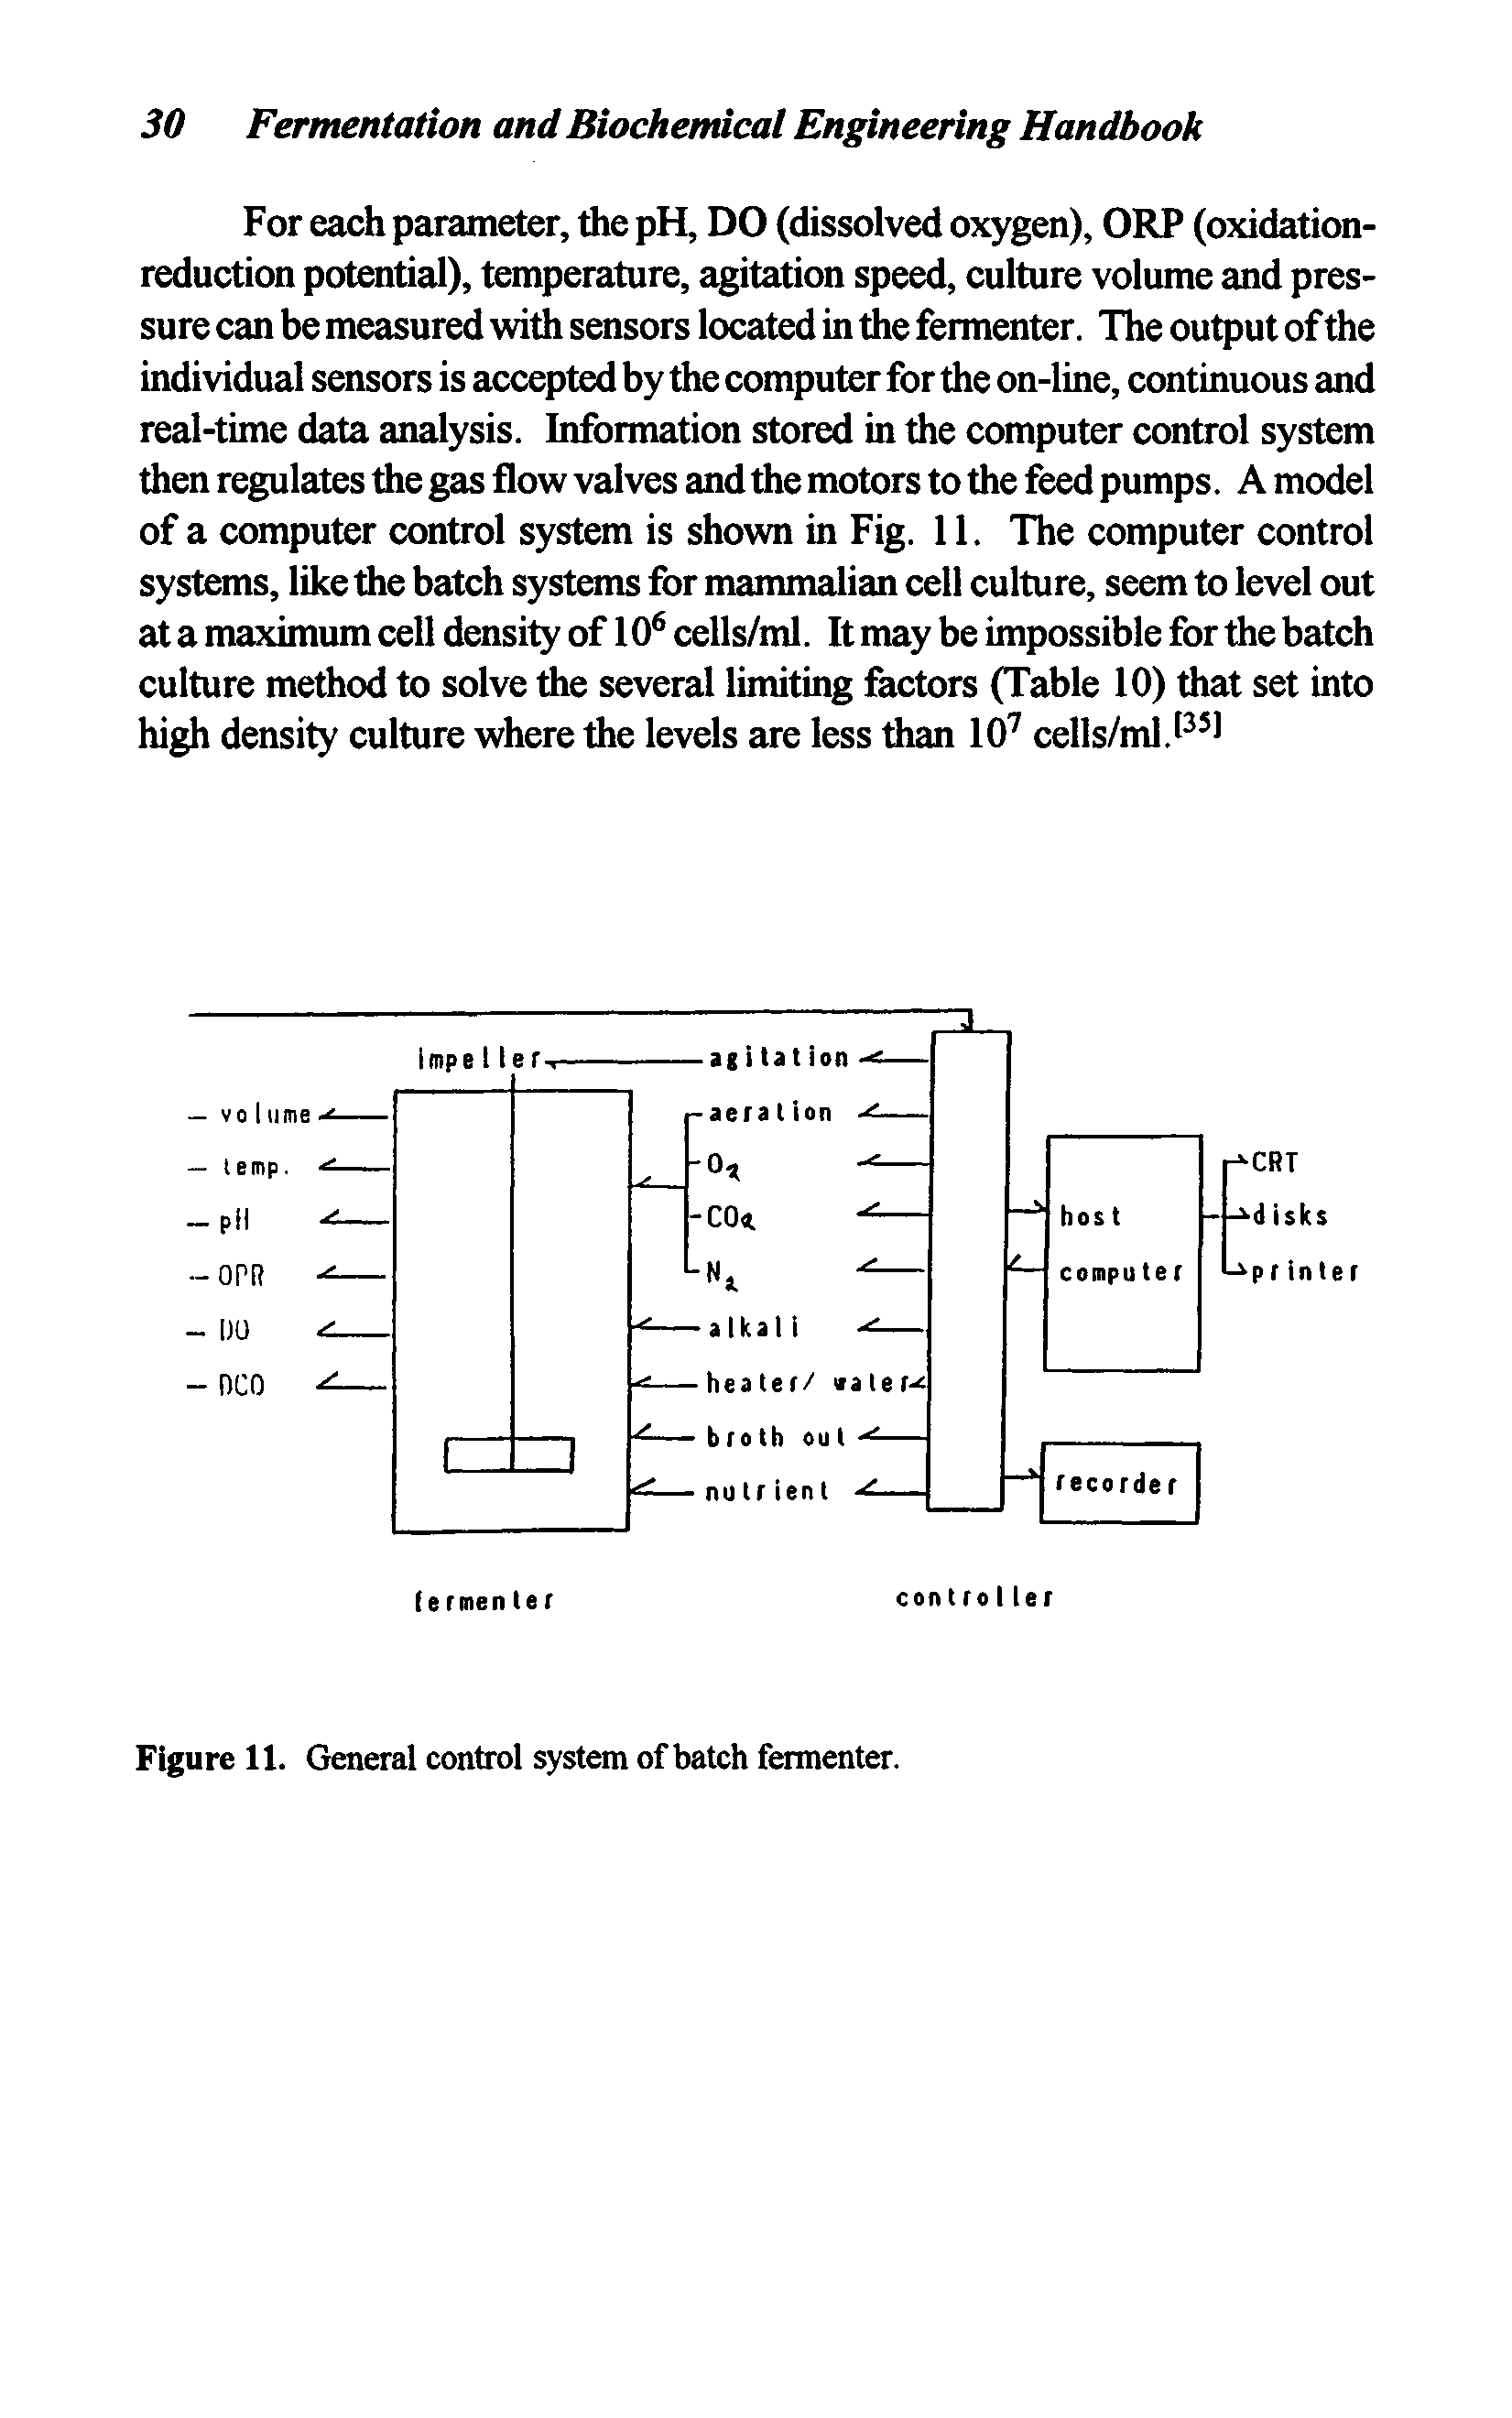 Figure 11. General control system of batch fermenter.